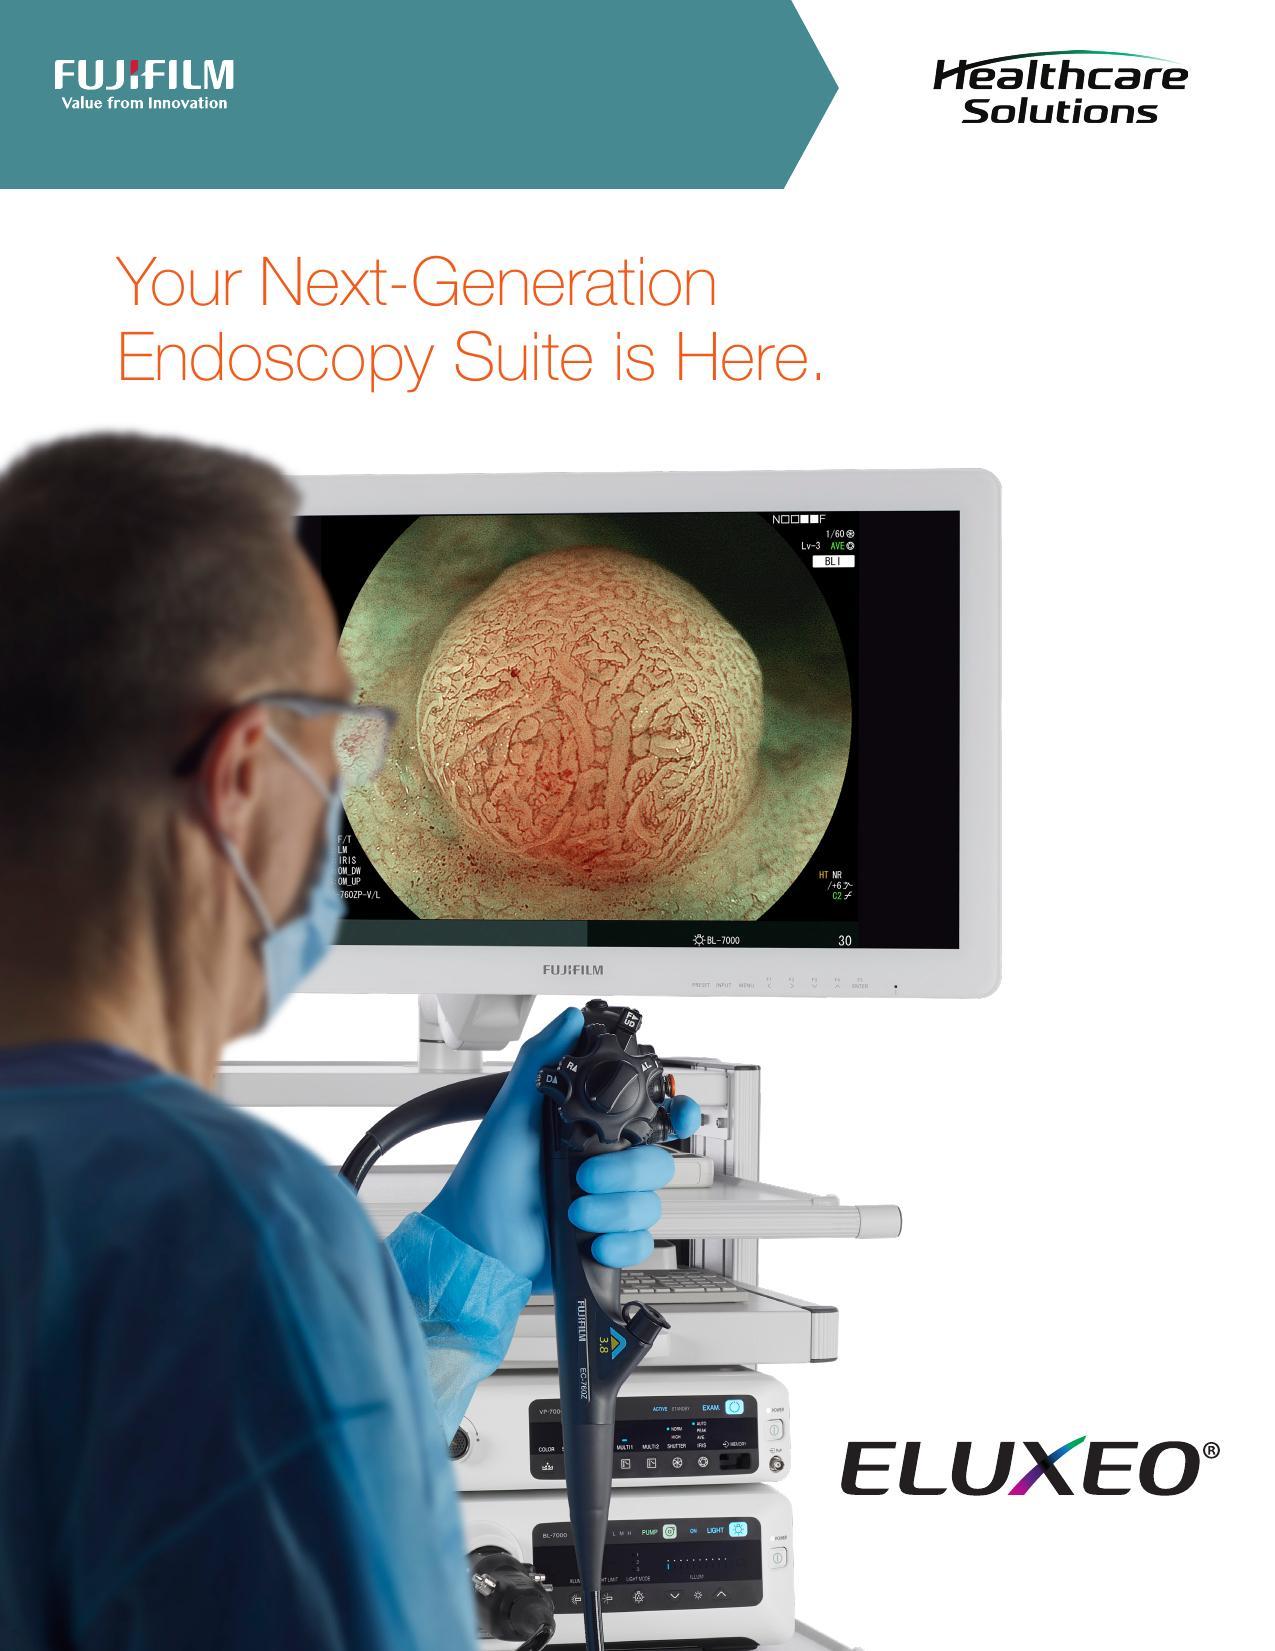 fujifilm-eluxeo-endoscopic-imaging-system-user-manual.pdf